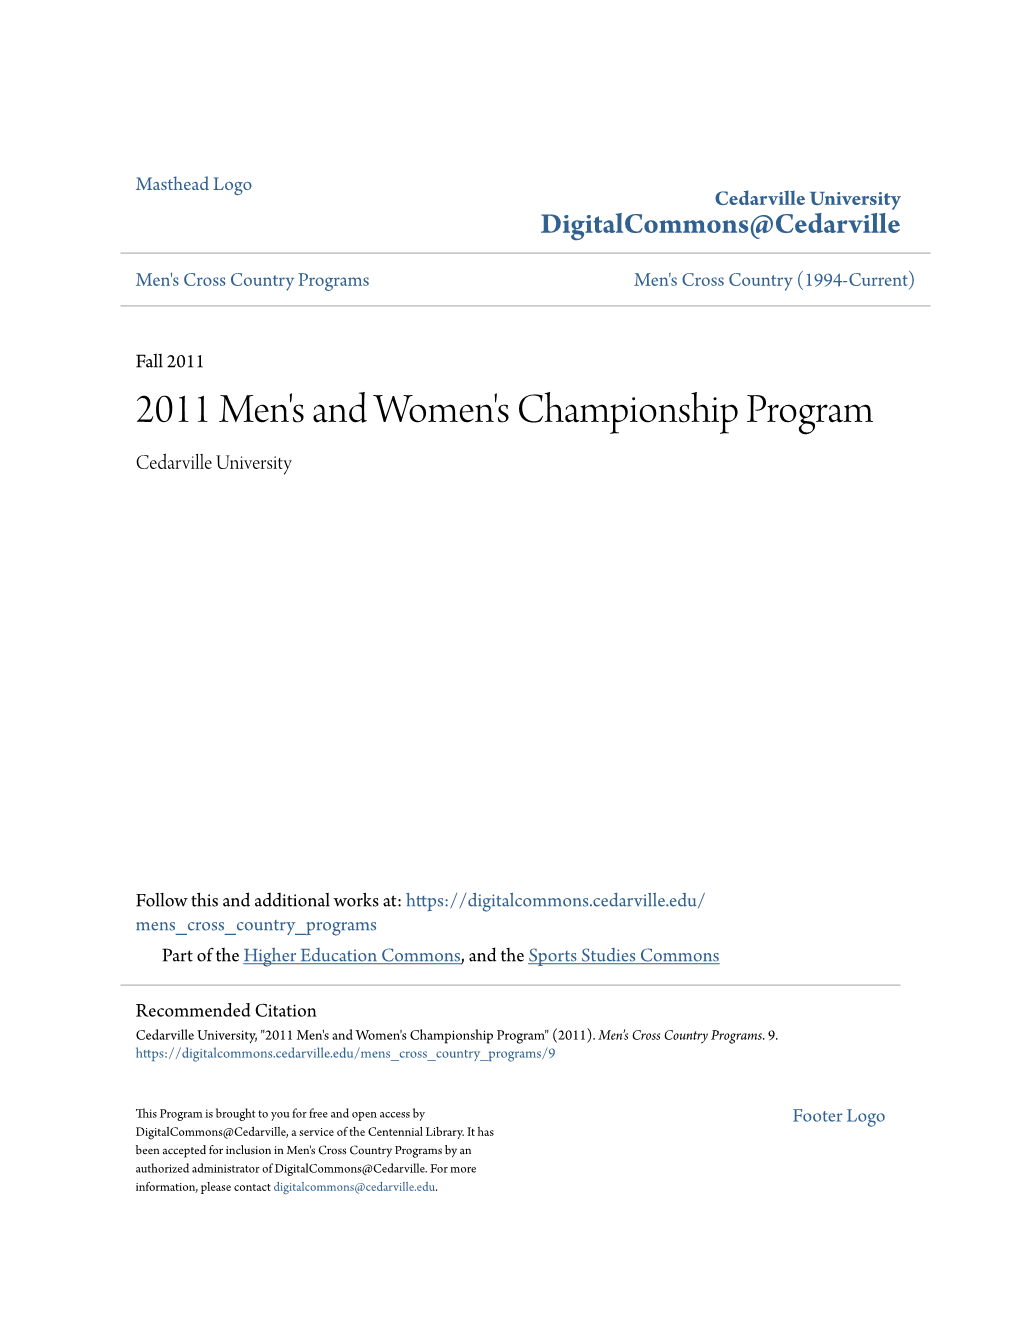 2011 Men's and Women's Championship Program Cedarville University